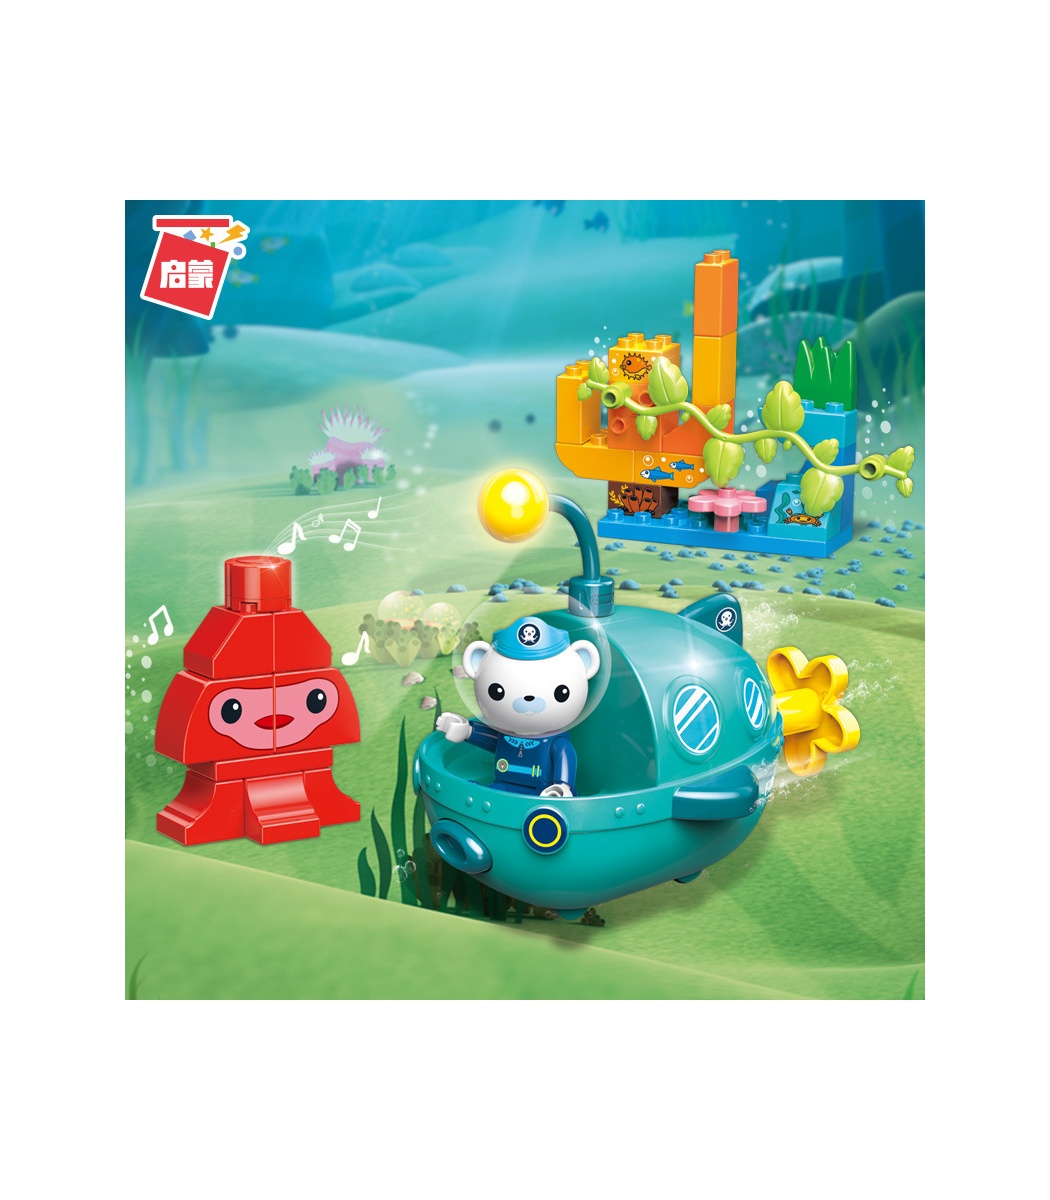 OCTONAUTS GUP-A Lattern Fish Boat Assembling Building Blocks Kids Toys 323pieces 